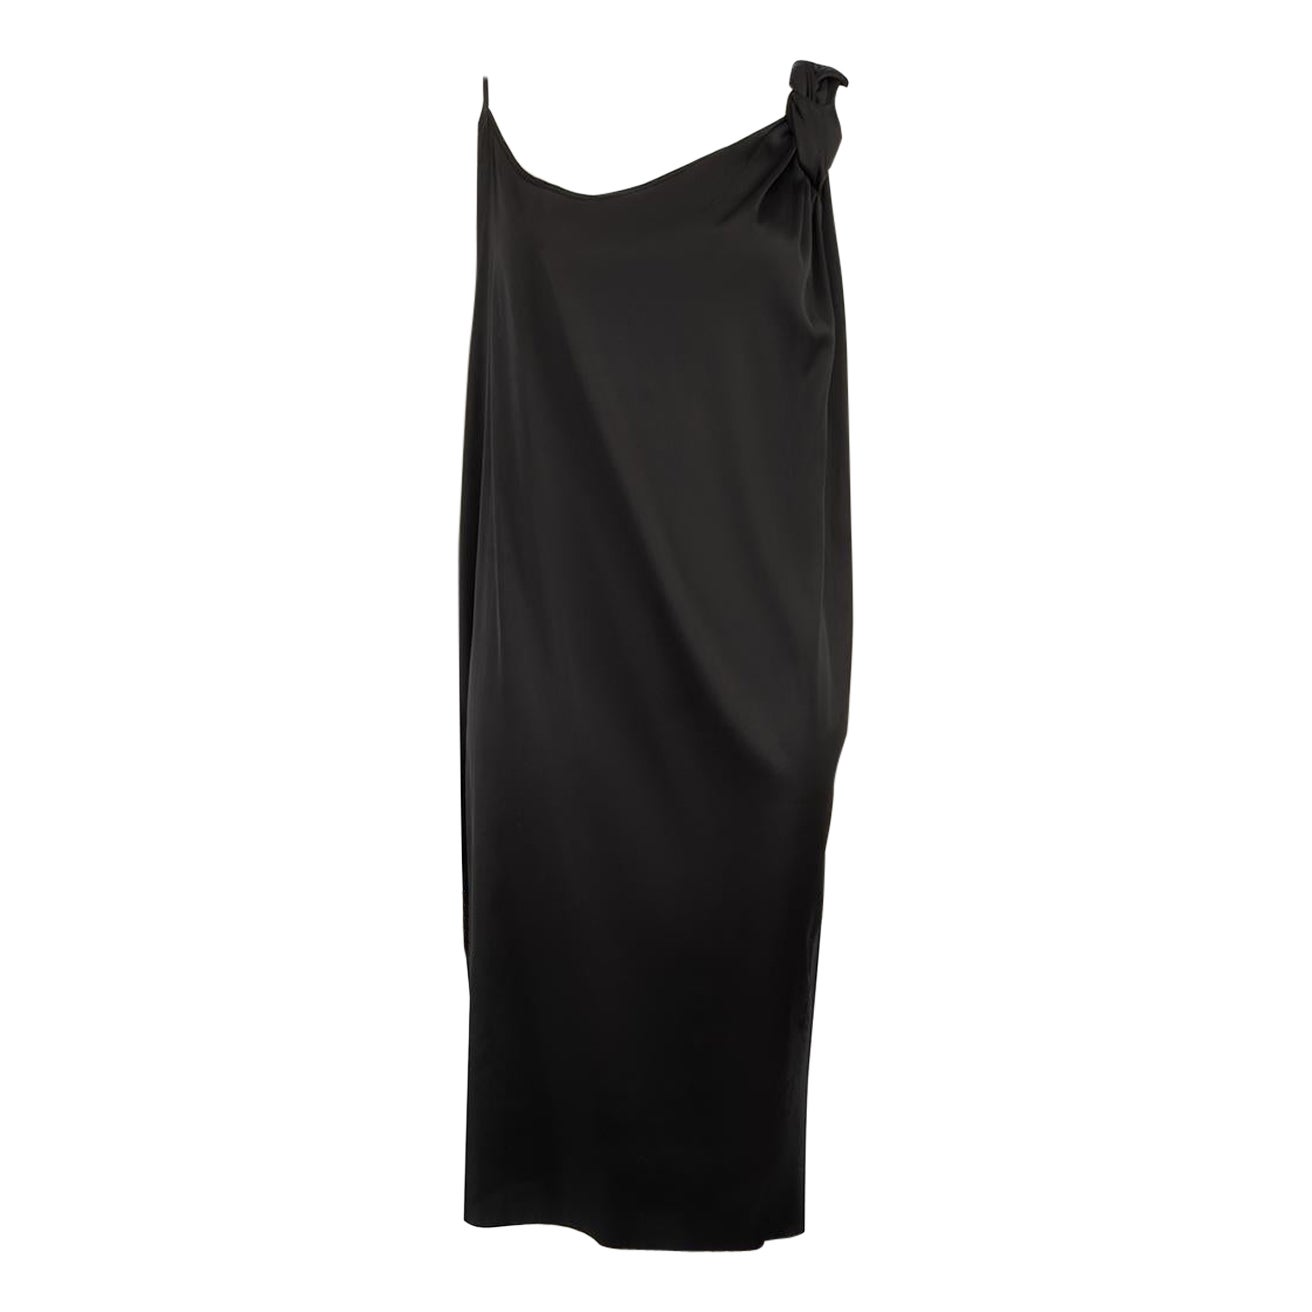 Acne Studios Black Braided Strap Dress Size M For Sale